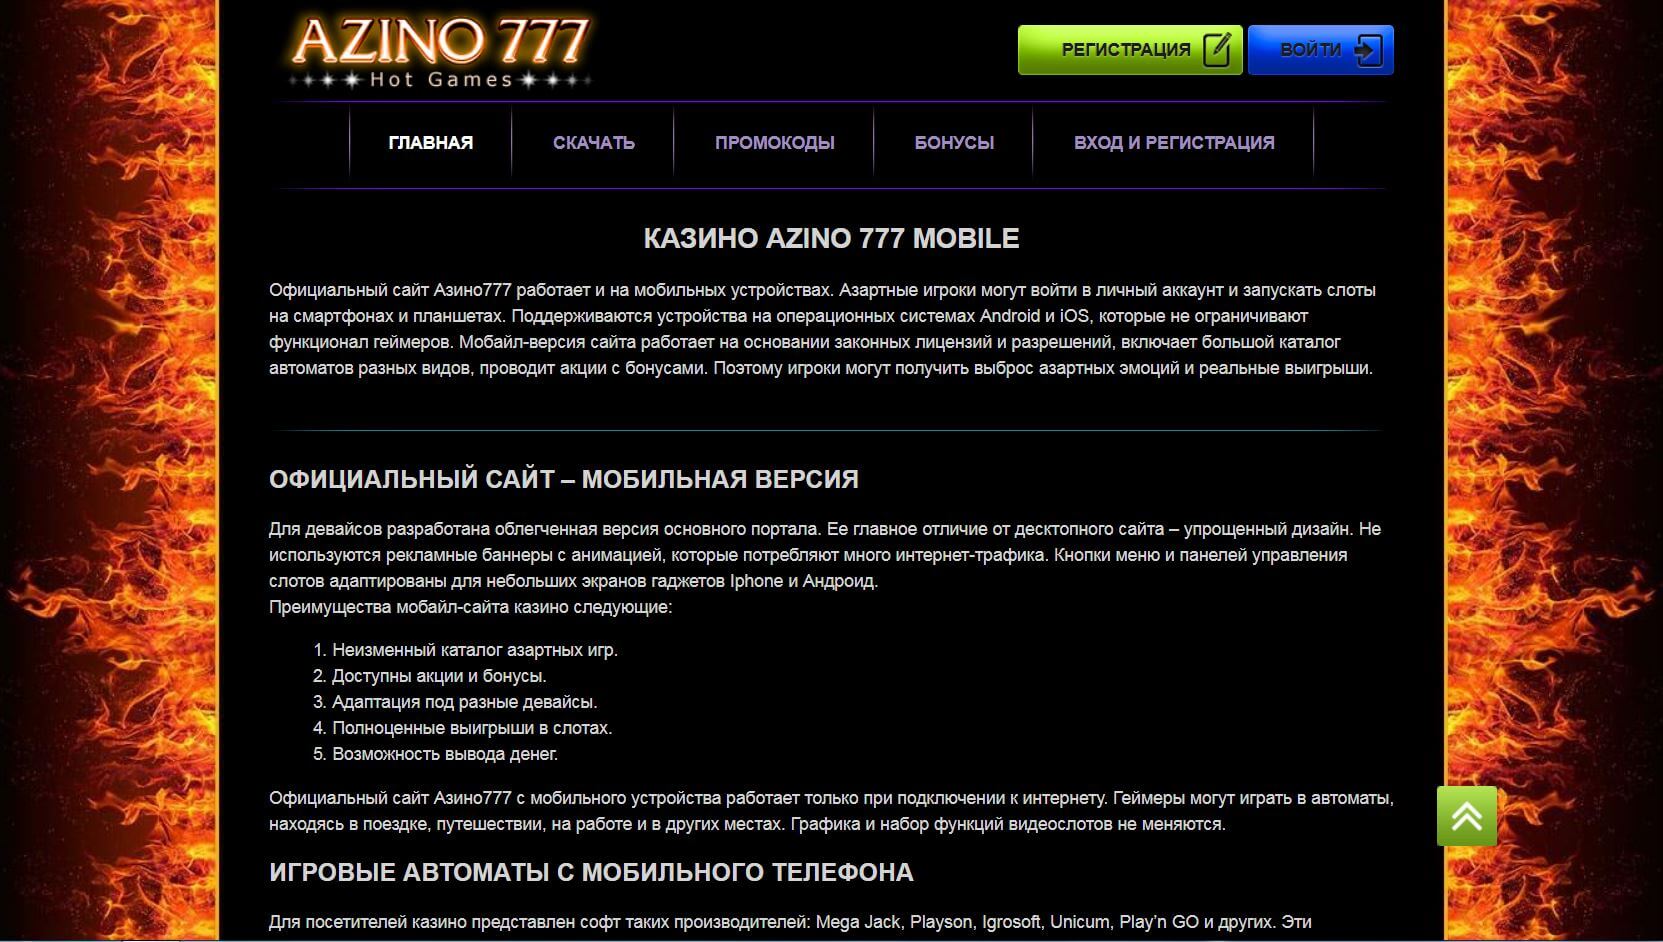 Azino777 azino777 site official top